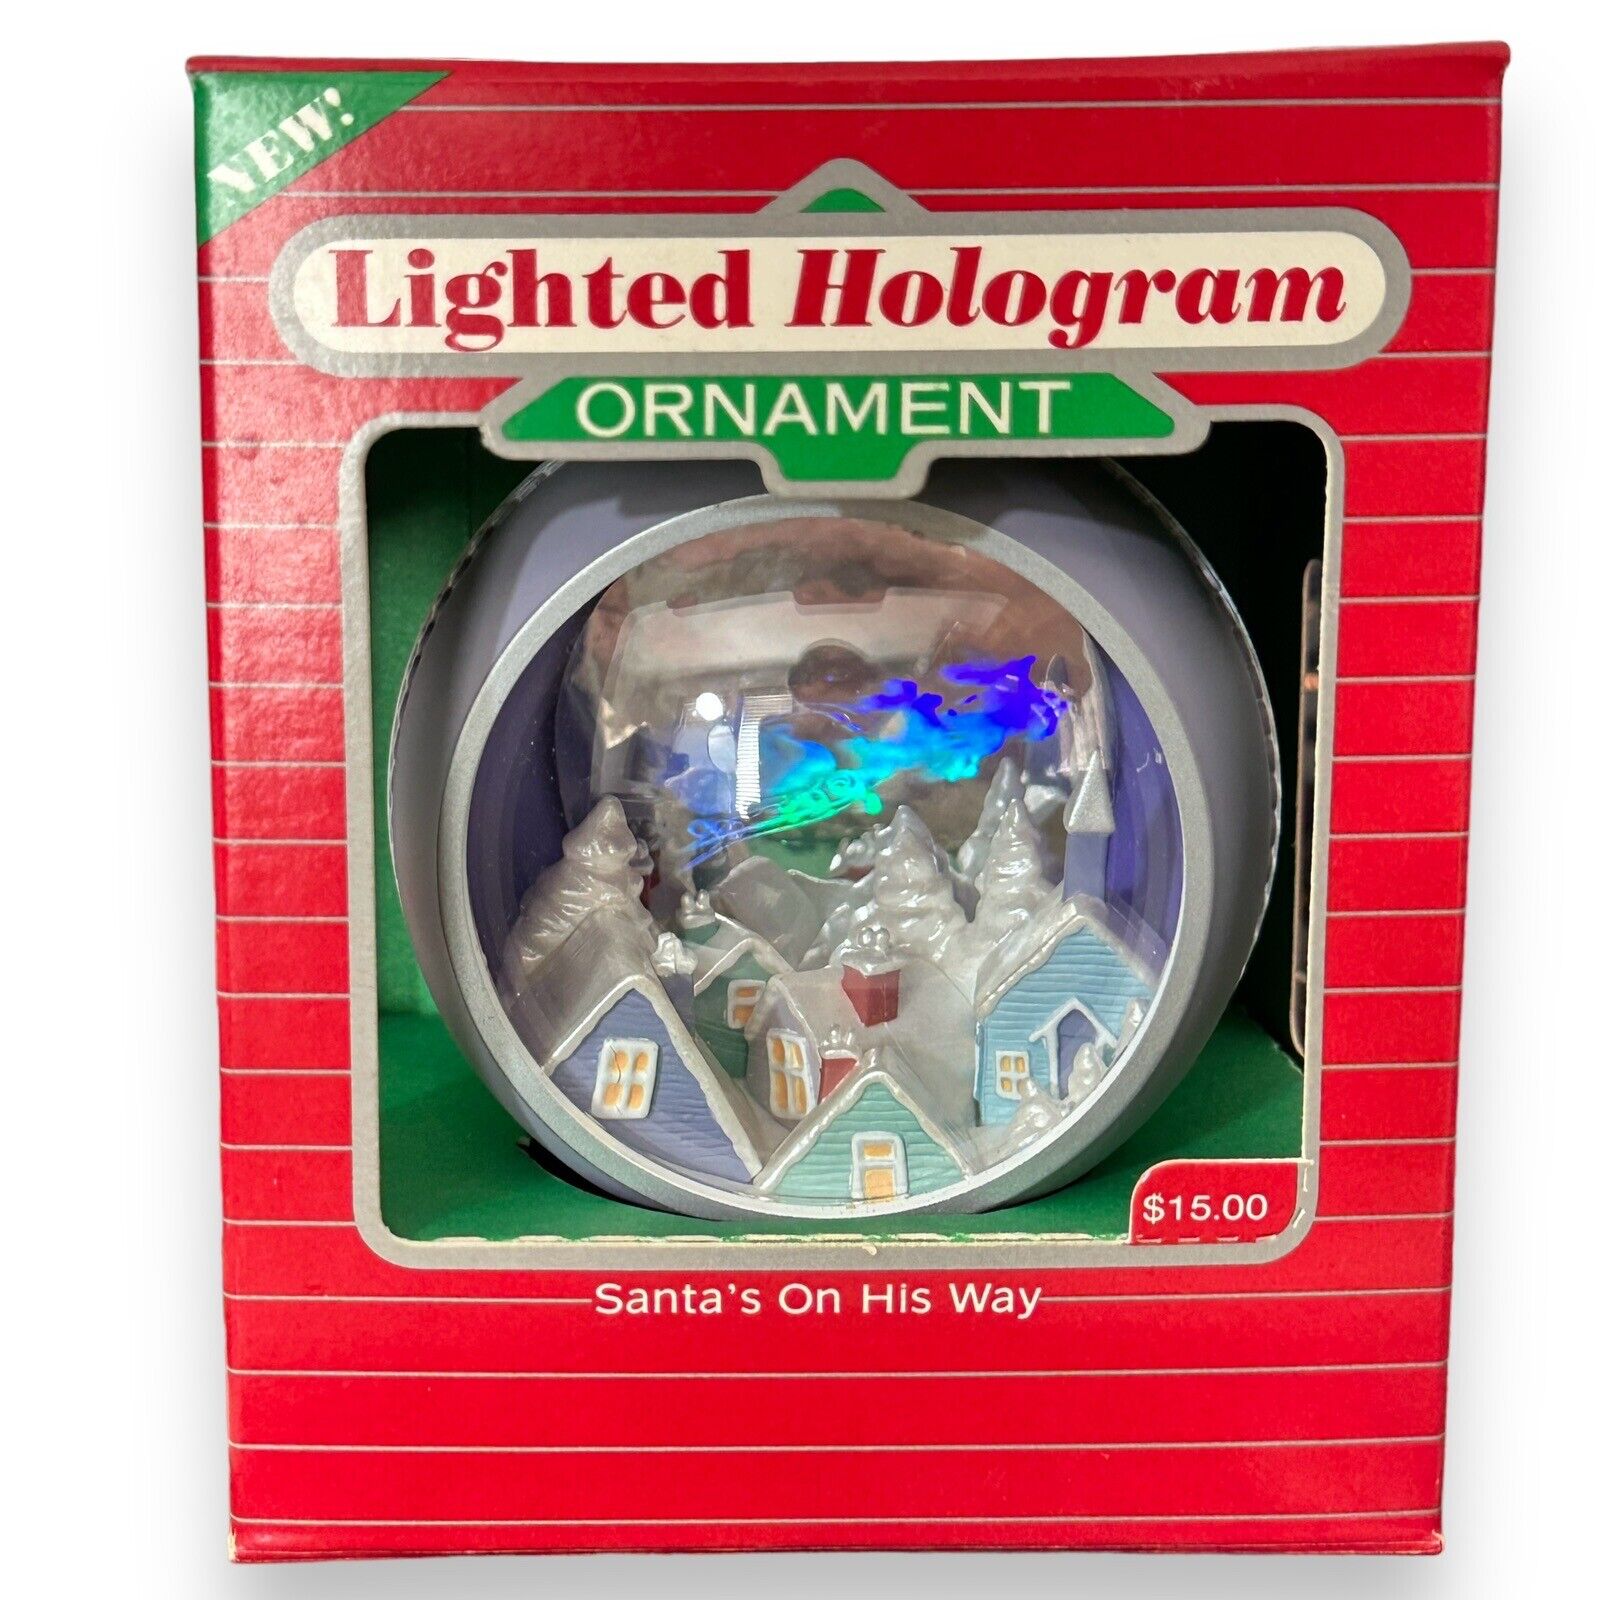 Hallmark Lighted Hologram Ornament Santas On His Way Holiday Magic VTG 1986 NEW